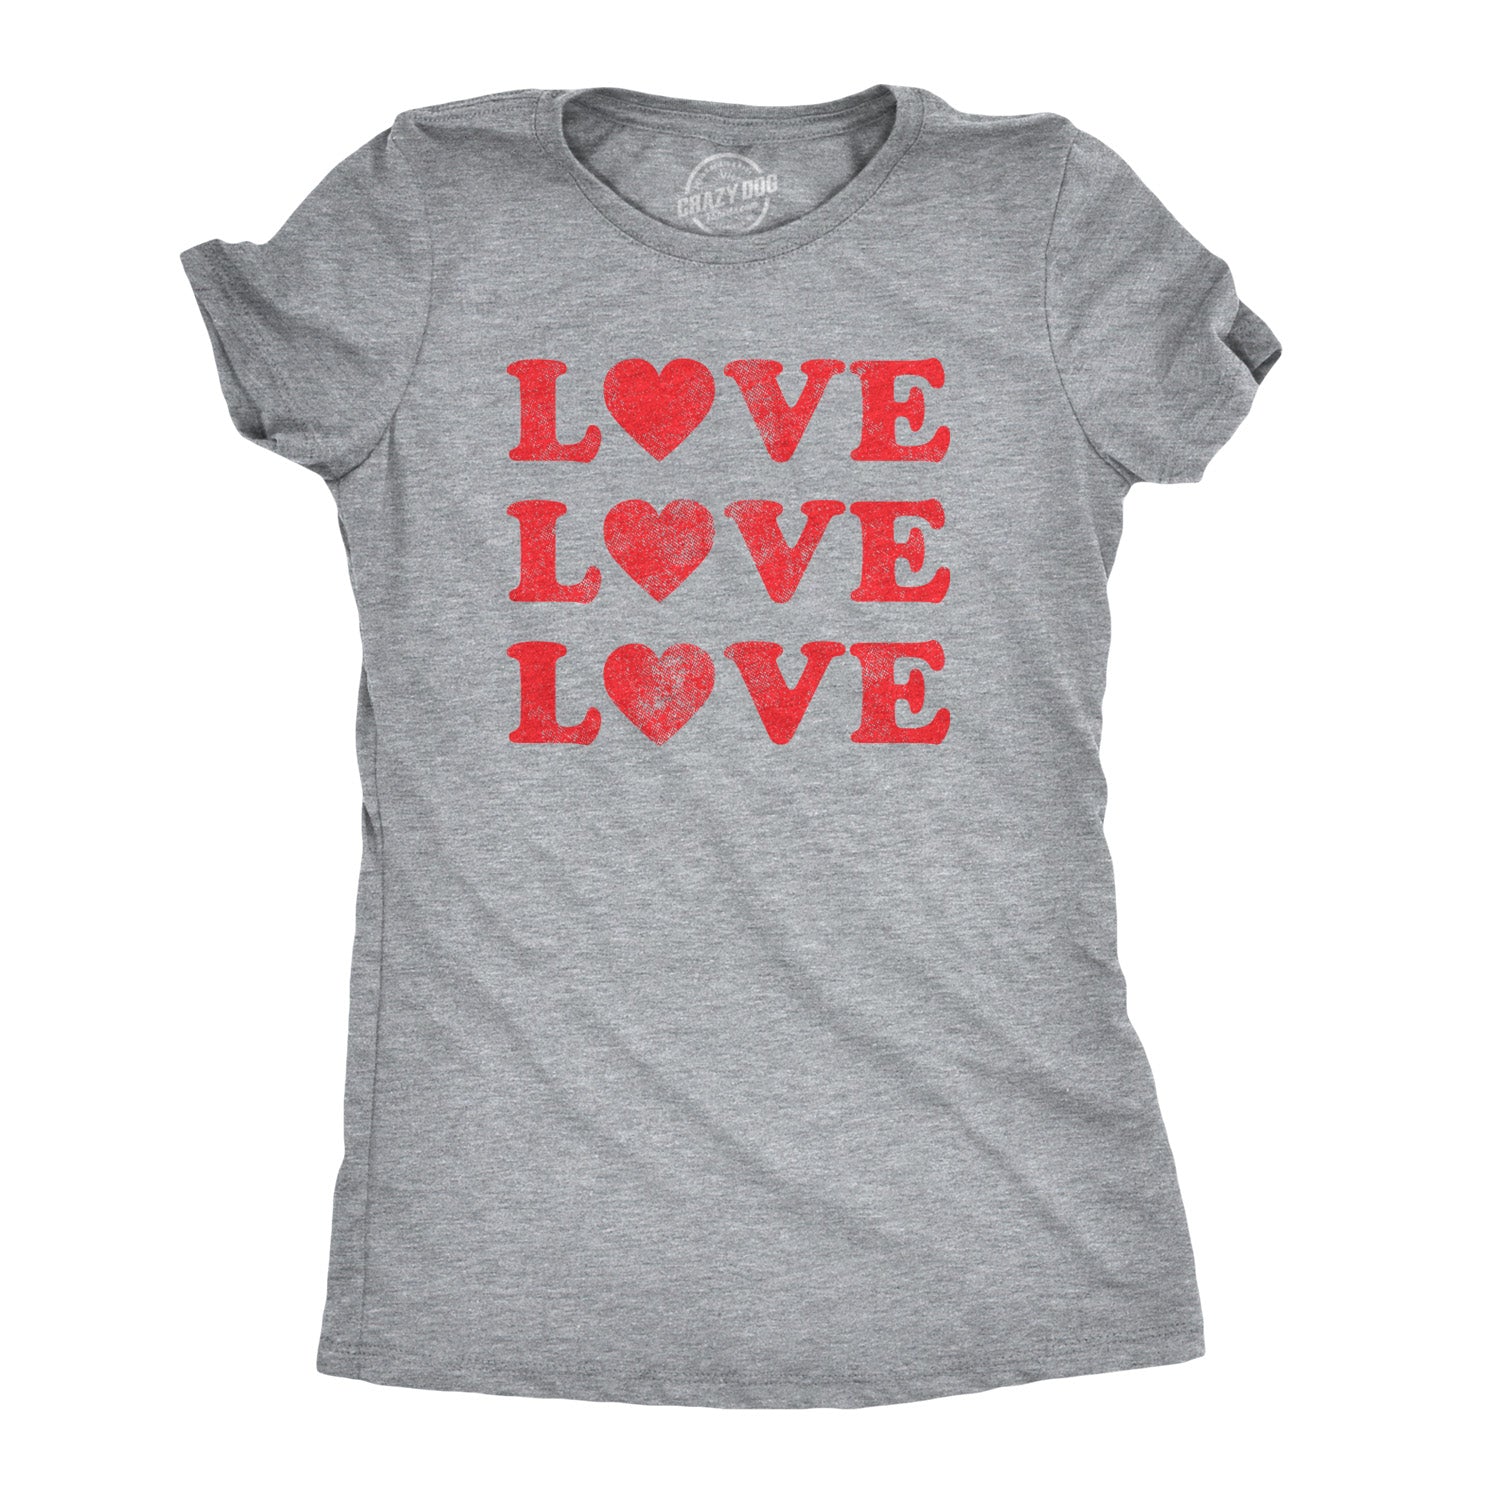 Funny Light Heather Grey - Love 3X Love 3 Hearts Womens T Shirt Nerdy Valentine's Day retro Tee